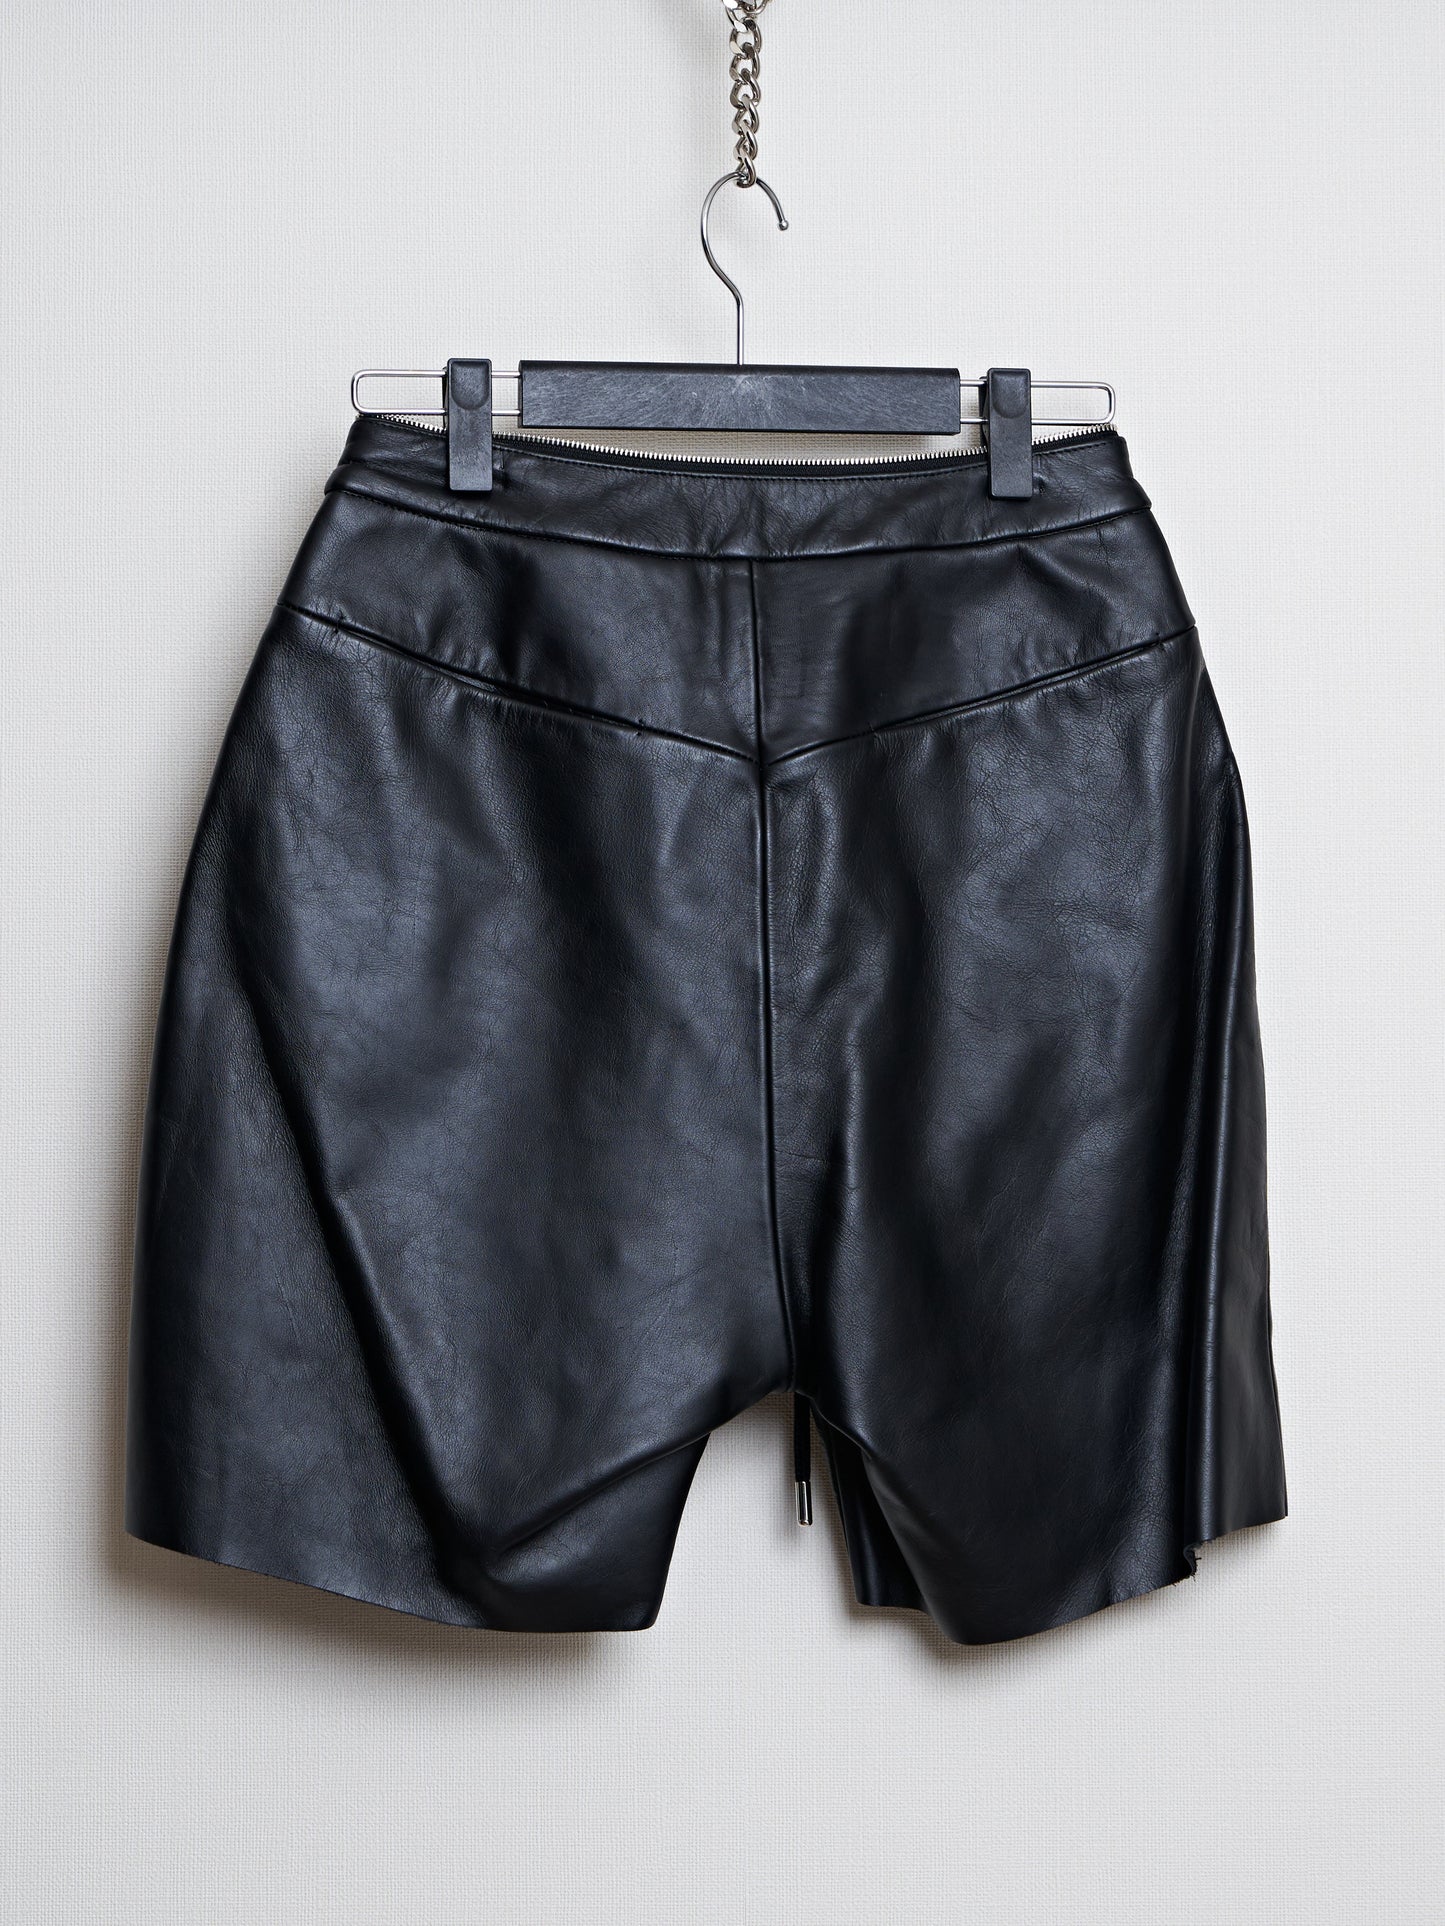 【SAMPLE】Leather Pants / BLACK